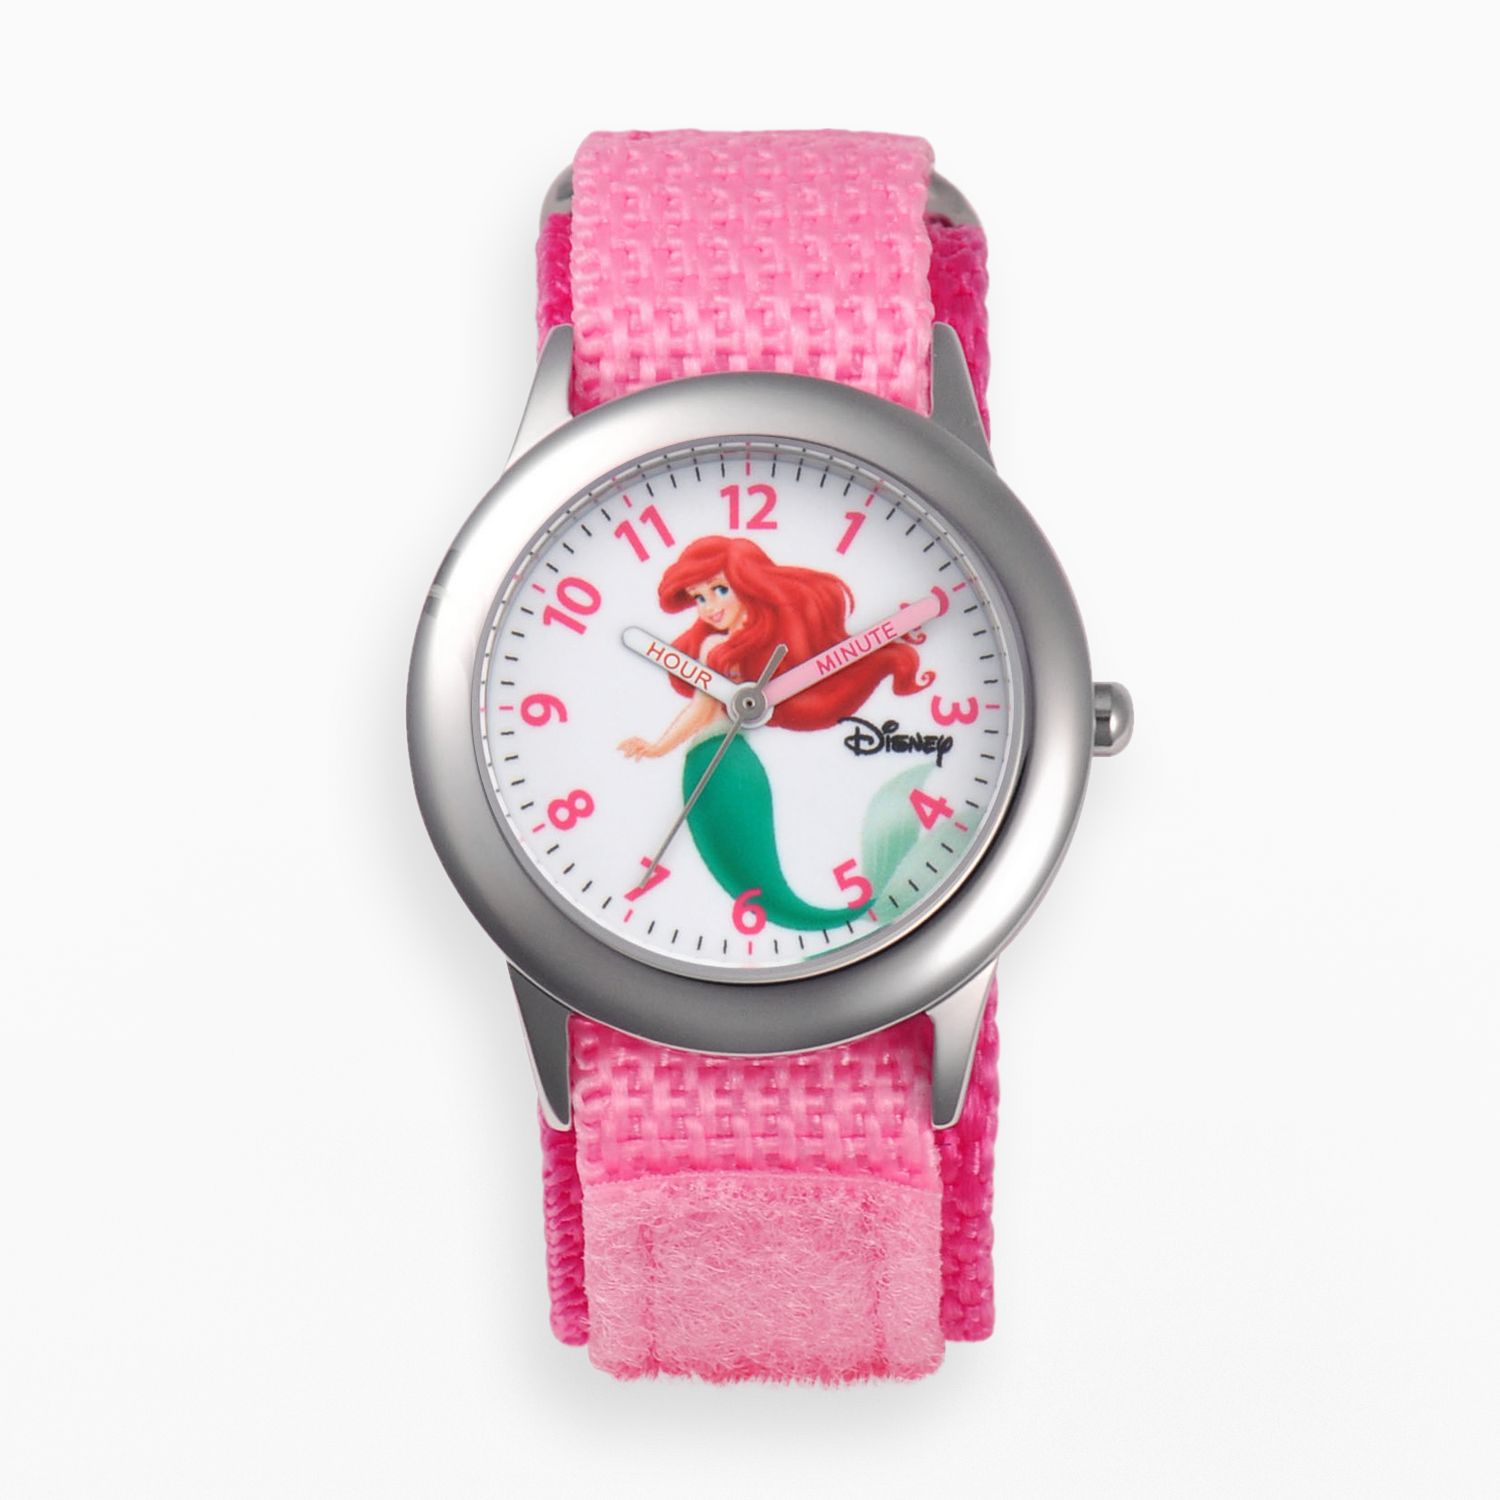 Image for Disney Princess Ariel Kids' Time Teacher Watch at Kohl's.